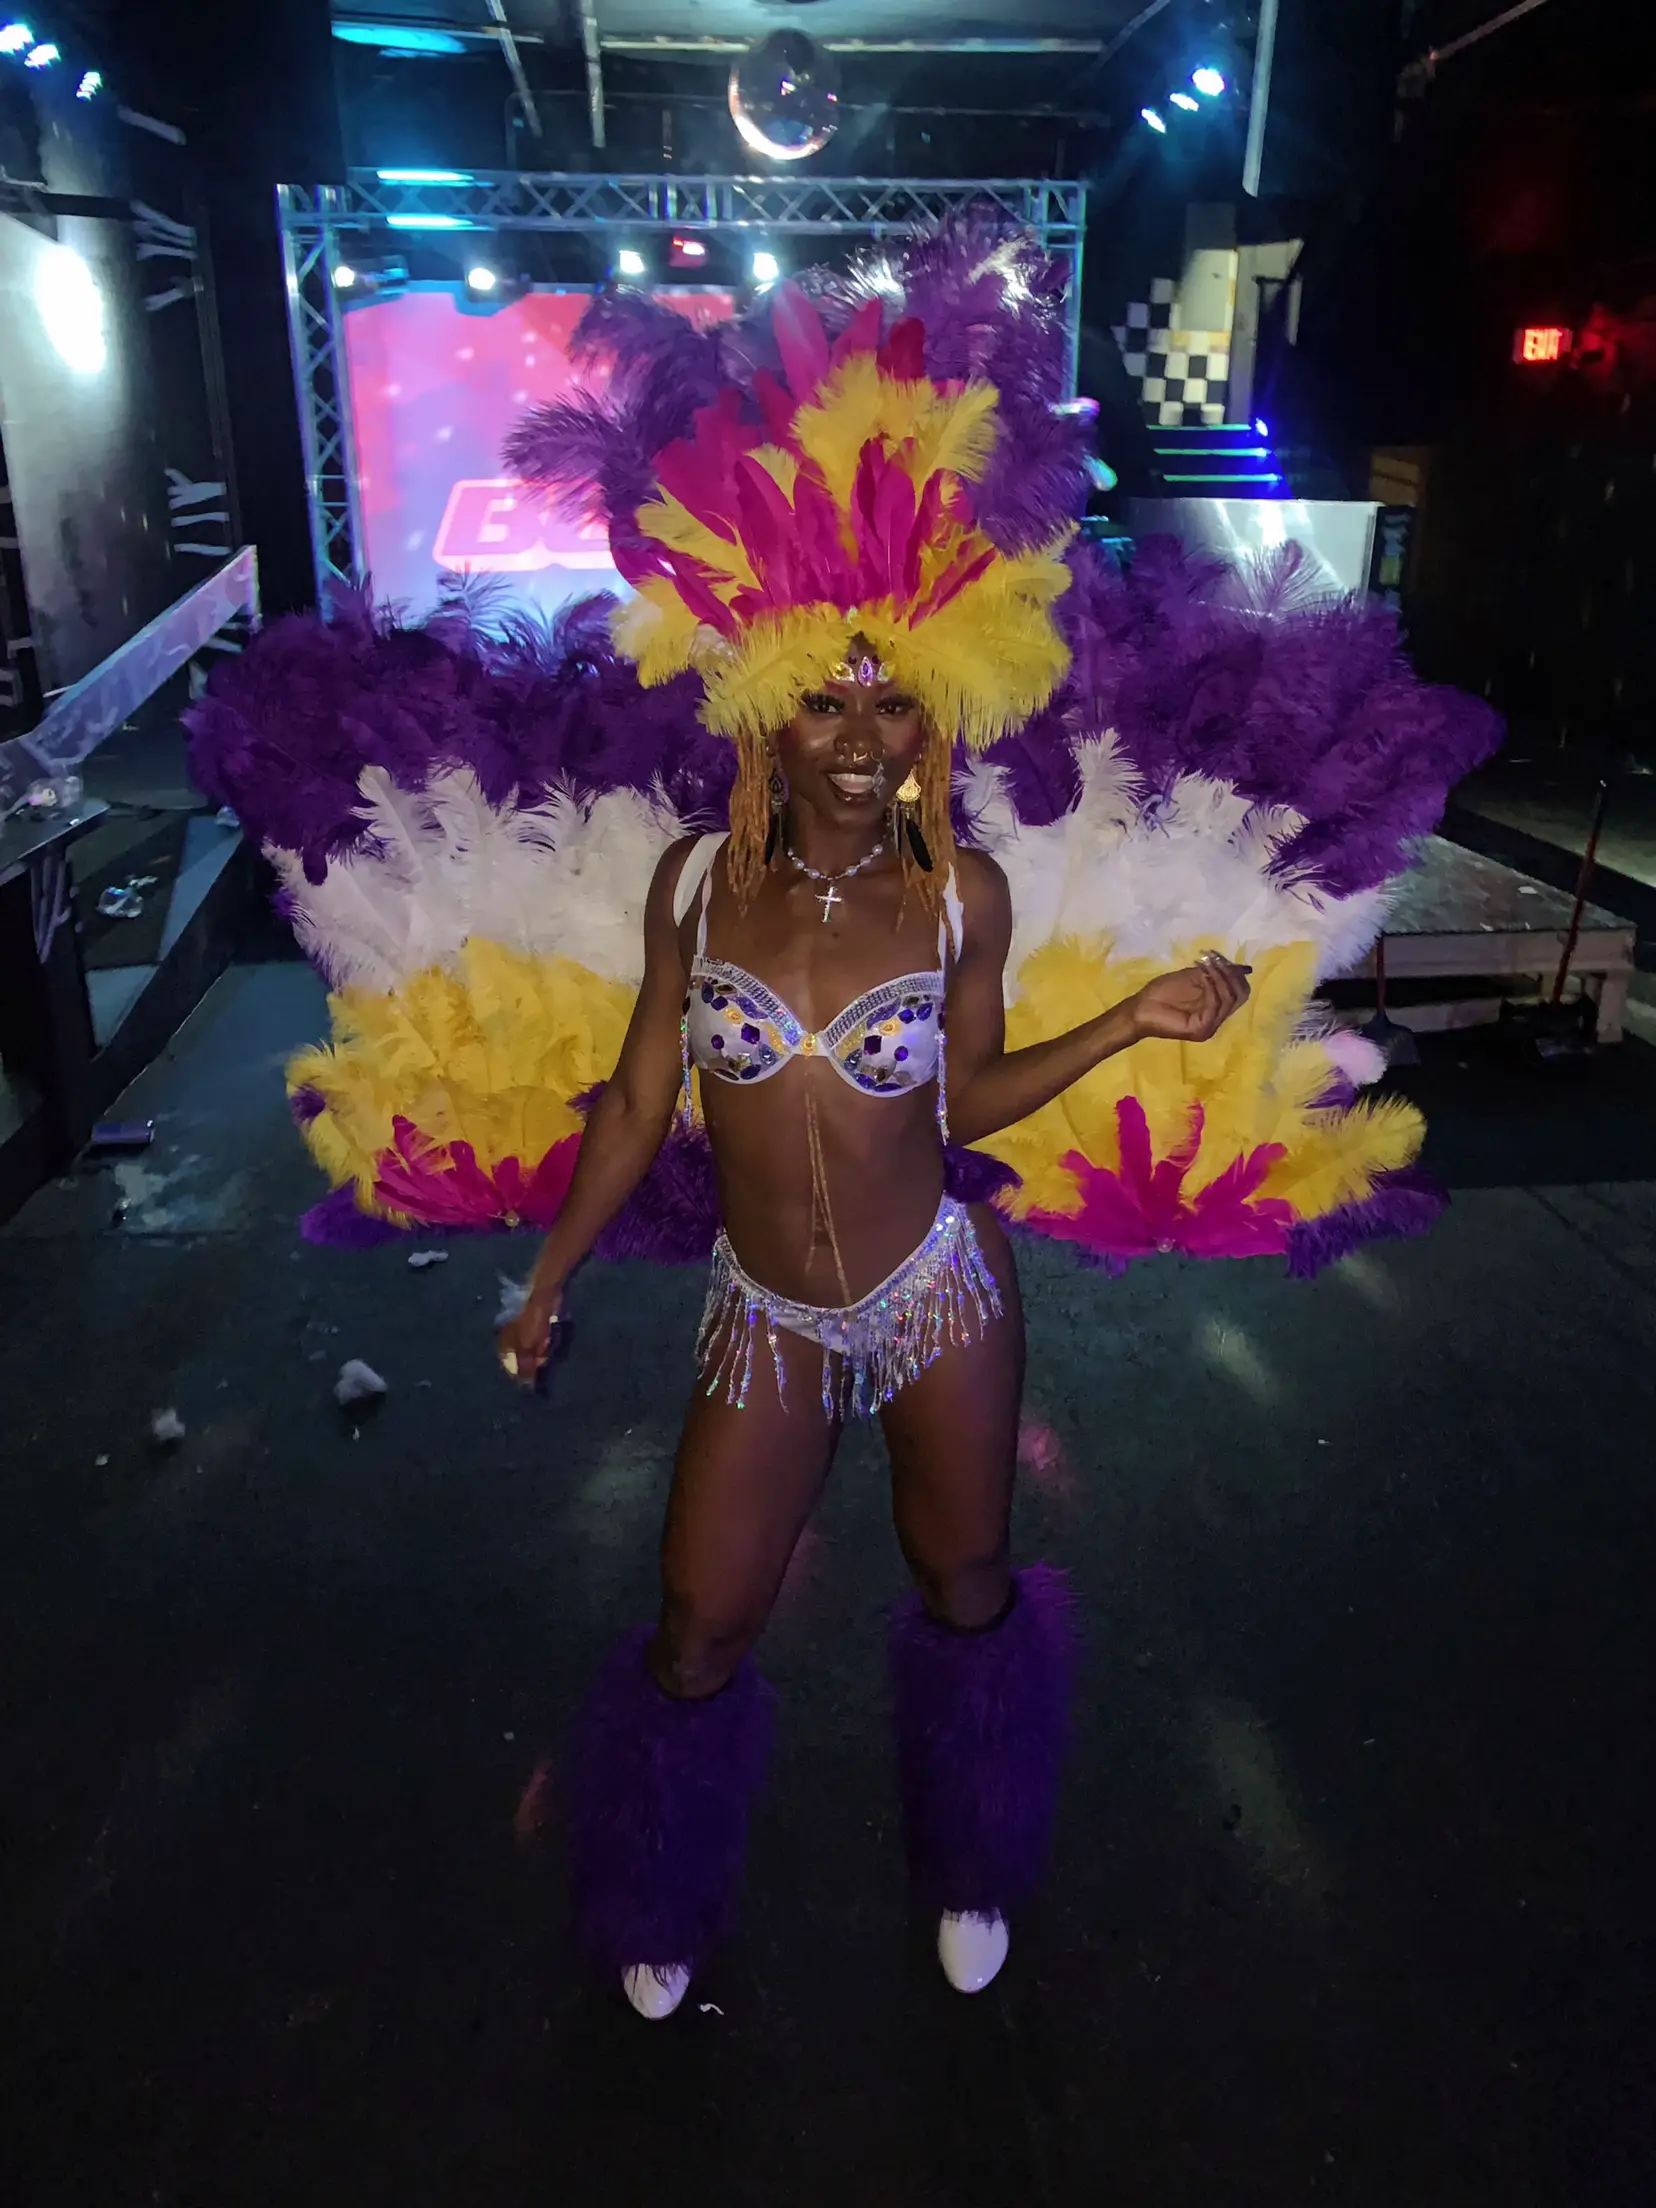 Feather Carnival Costume Samba Backpack - Adult Cosplay/Halloween